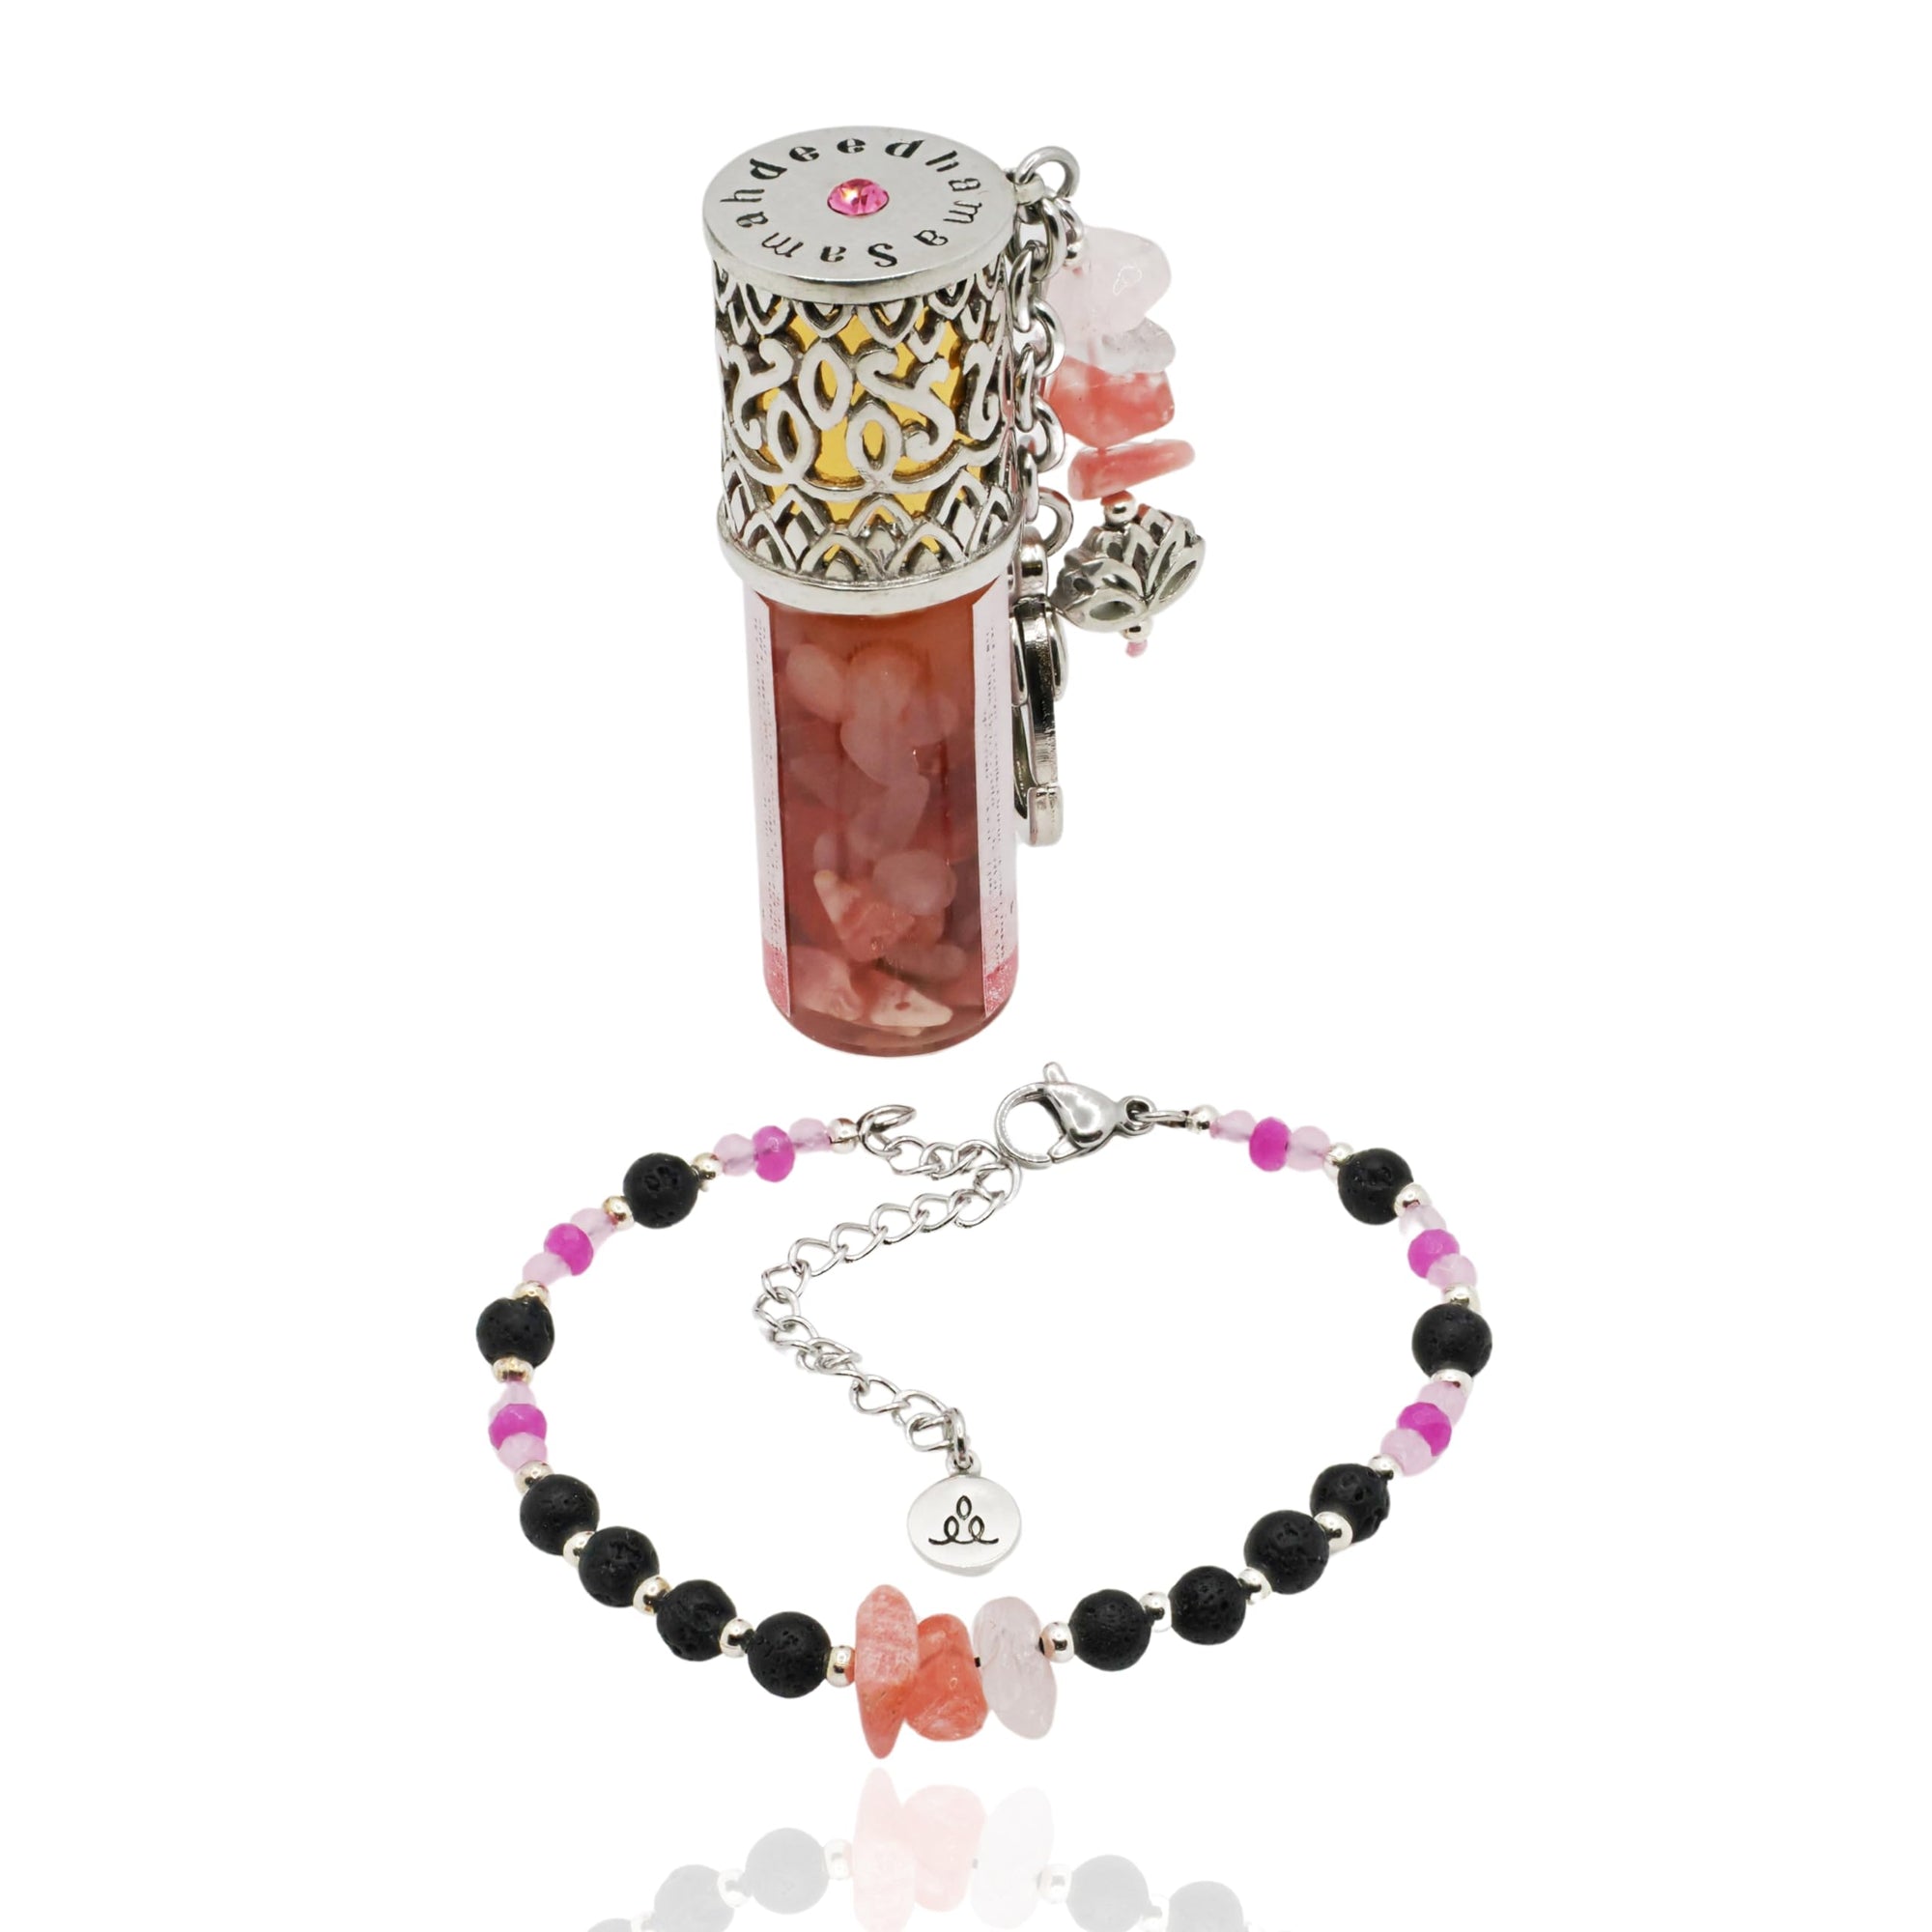 Samahdee Scentual Stones: Aromatherapy Diffuser Jewelry for Tranquility, Prosperity, Love - Organic Essential Oils & Healing Gemstones Bracelets